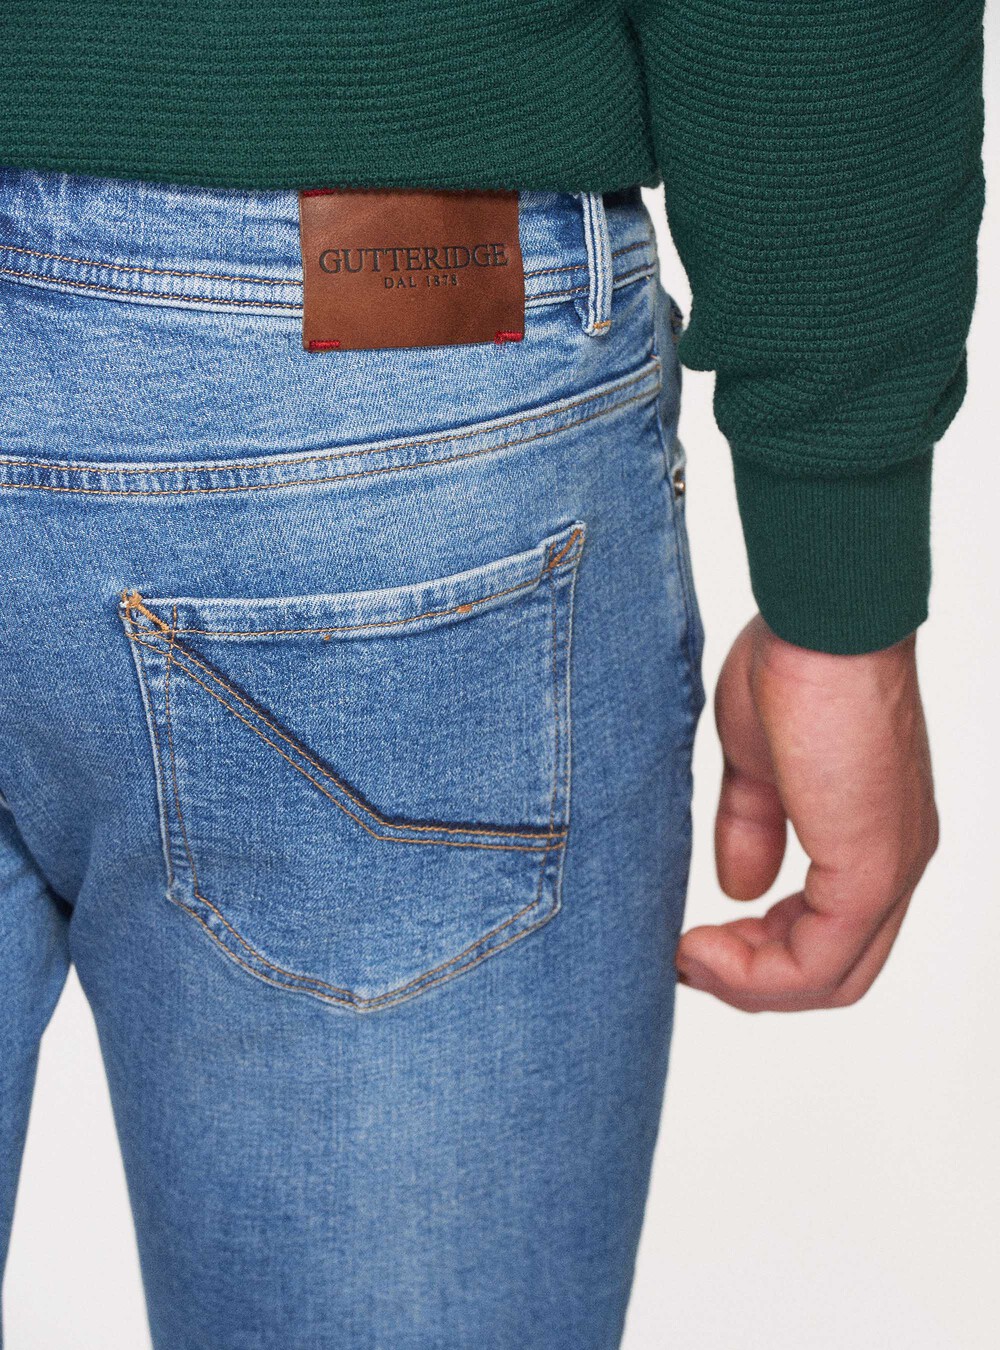 Inconcebible Empresa Superioridad Jeans Regular Fit | GutteridgeEU | Jeans Uomo